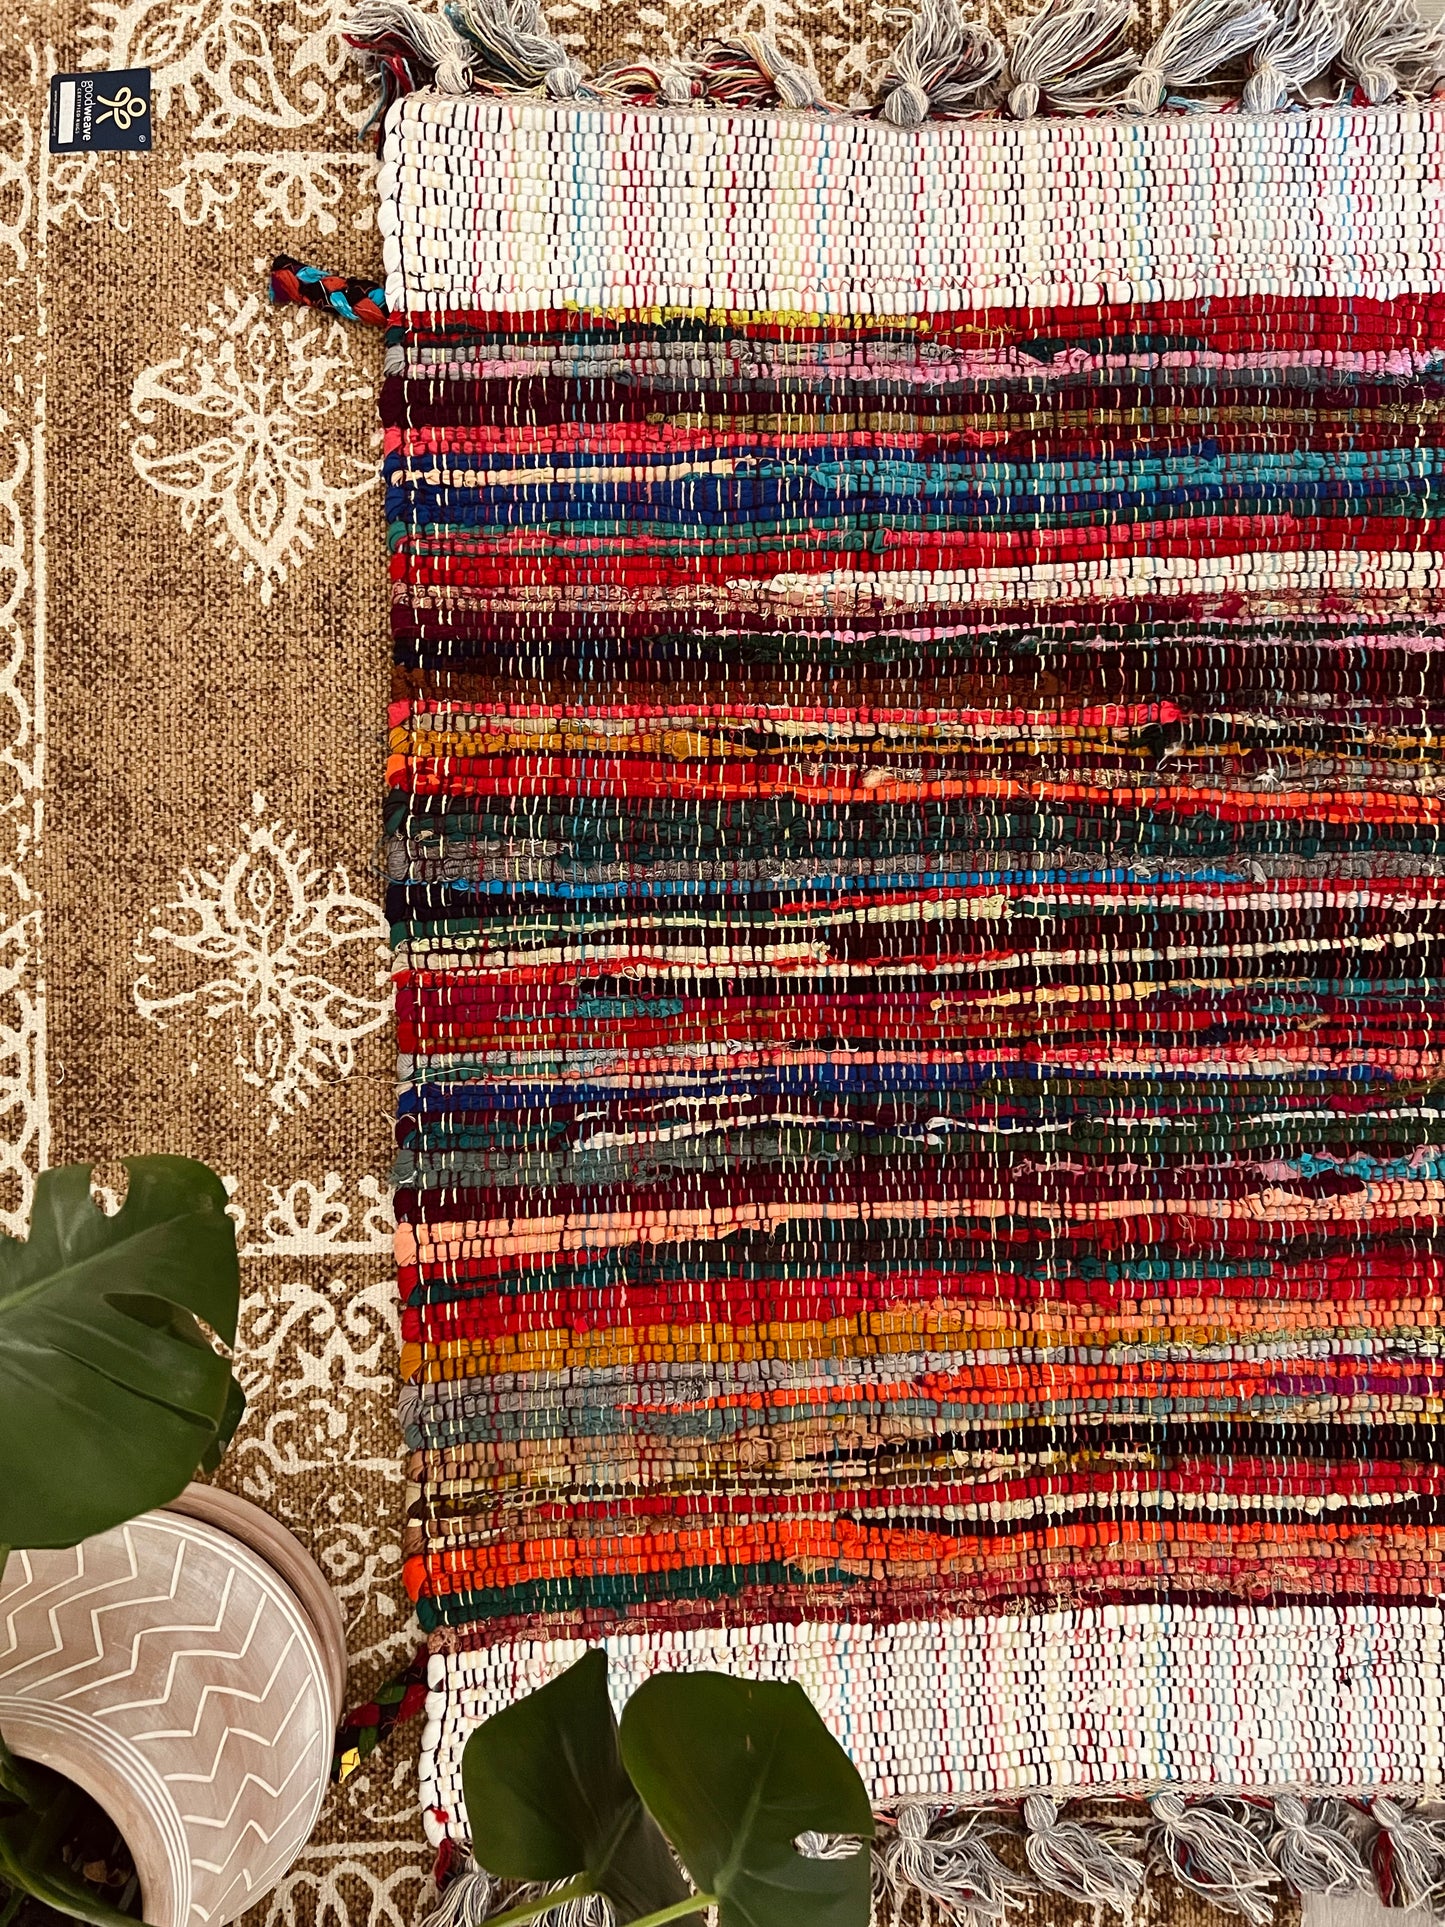 Handmade & Fair Trade Rainbow Rag Rug Bohemian & Hippie Decor Mat 